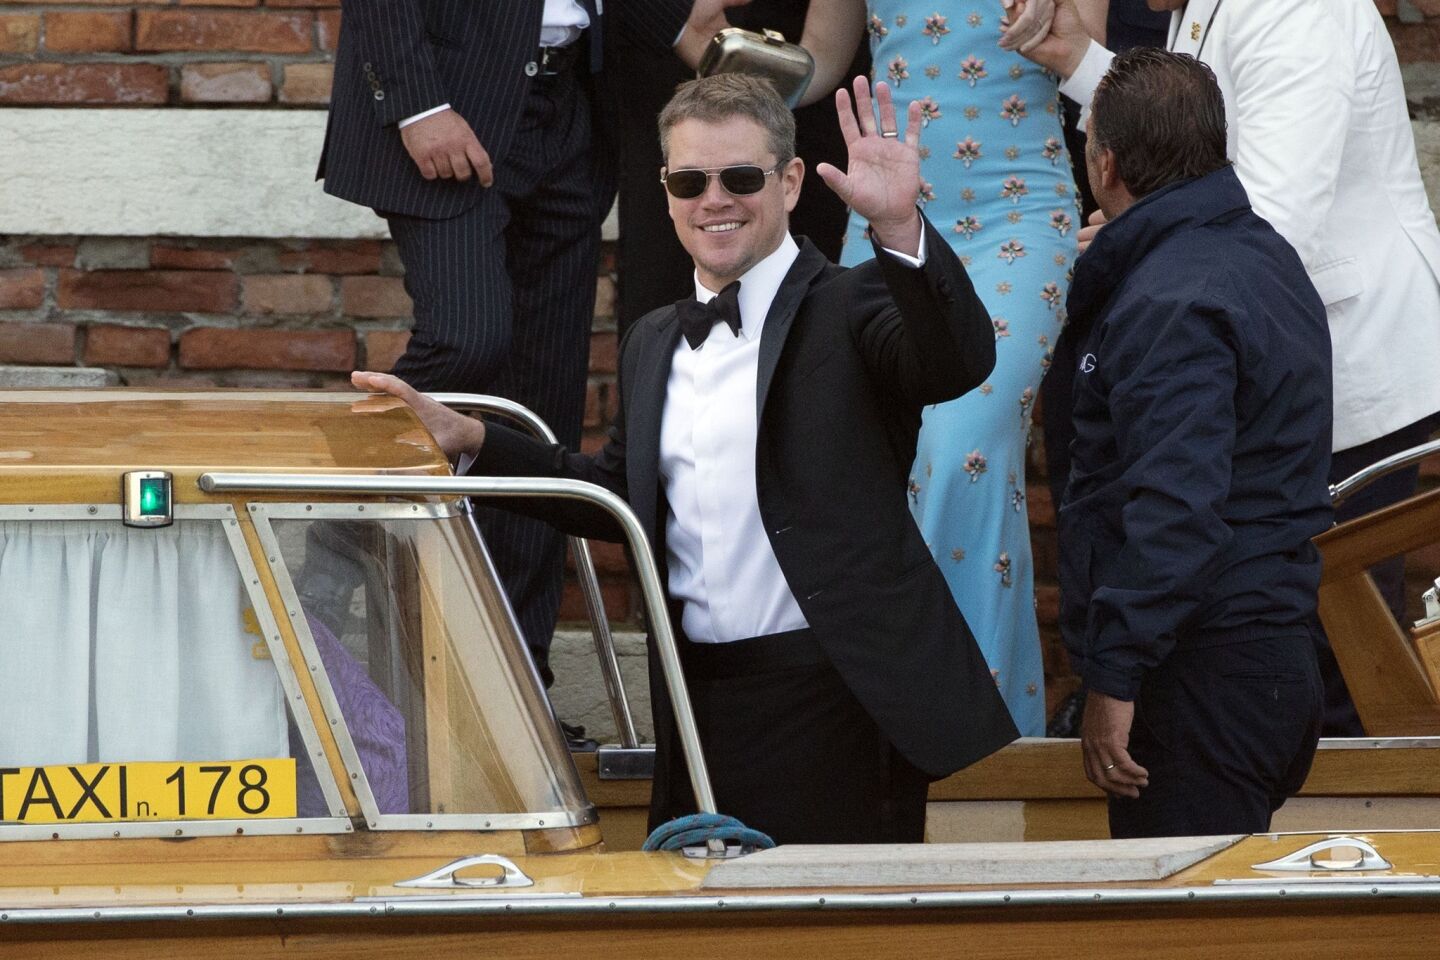 Matt Damon hops a ride to his friend's wedding in Venice.